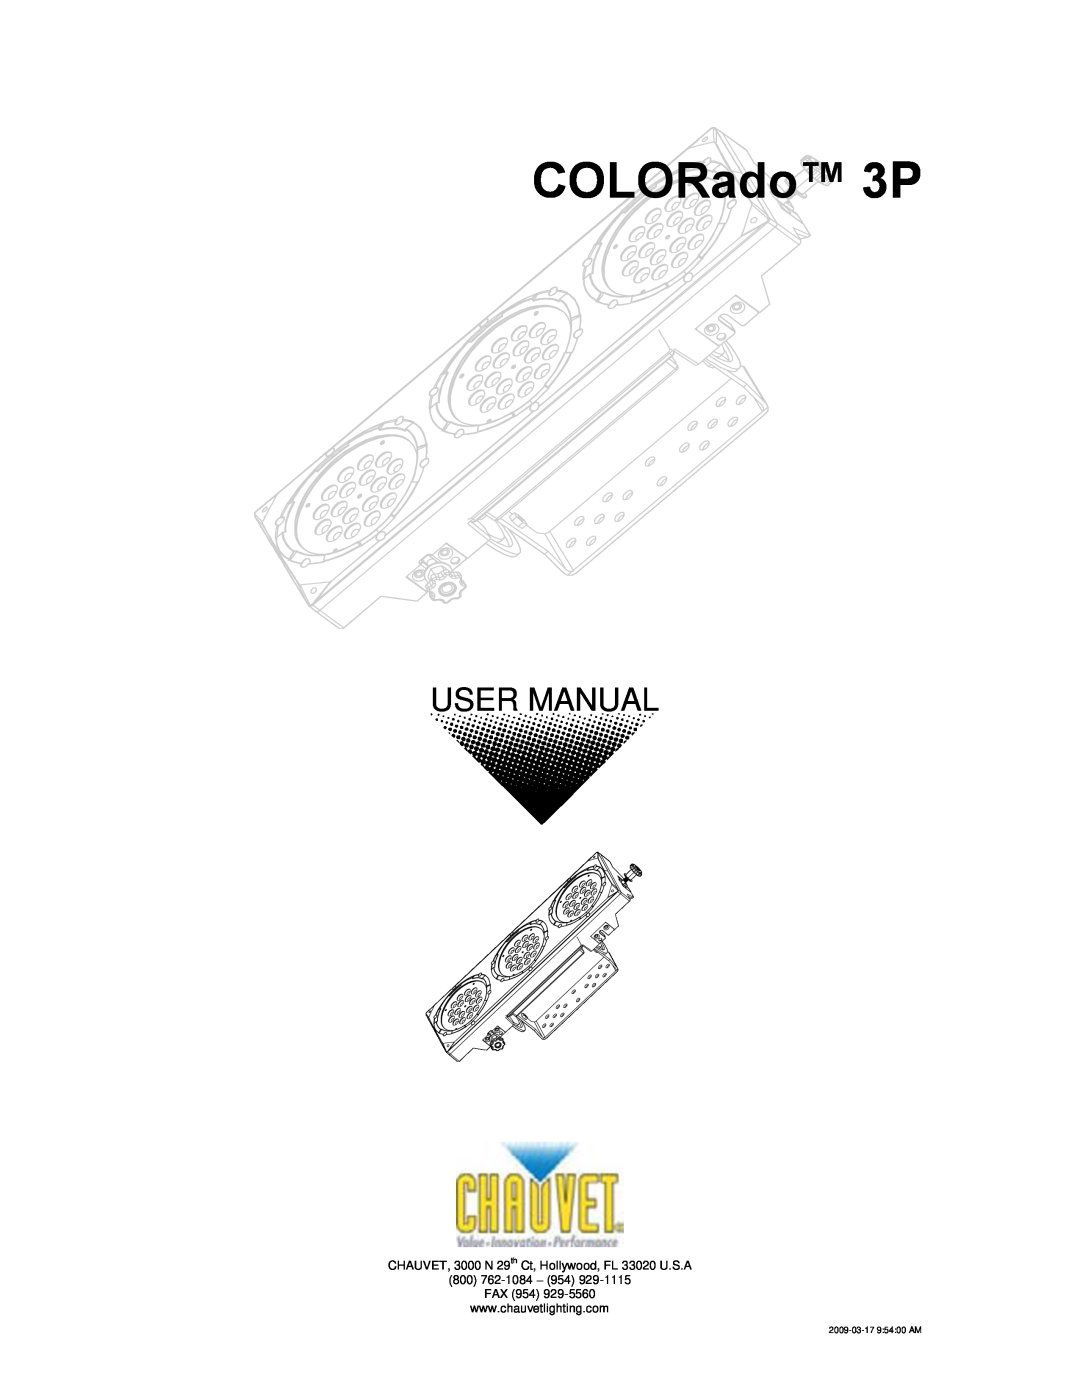 Chauvet user manual COLORado 3P, User Manual, 2009-03-17 95400 AM 